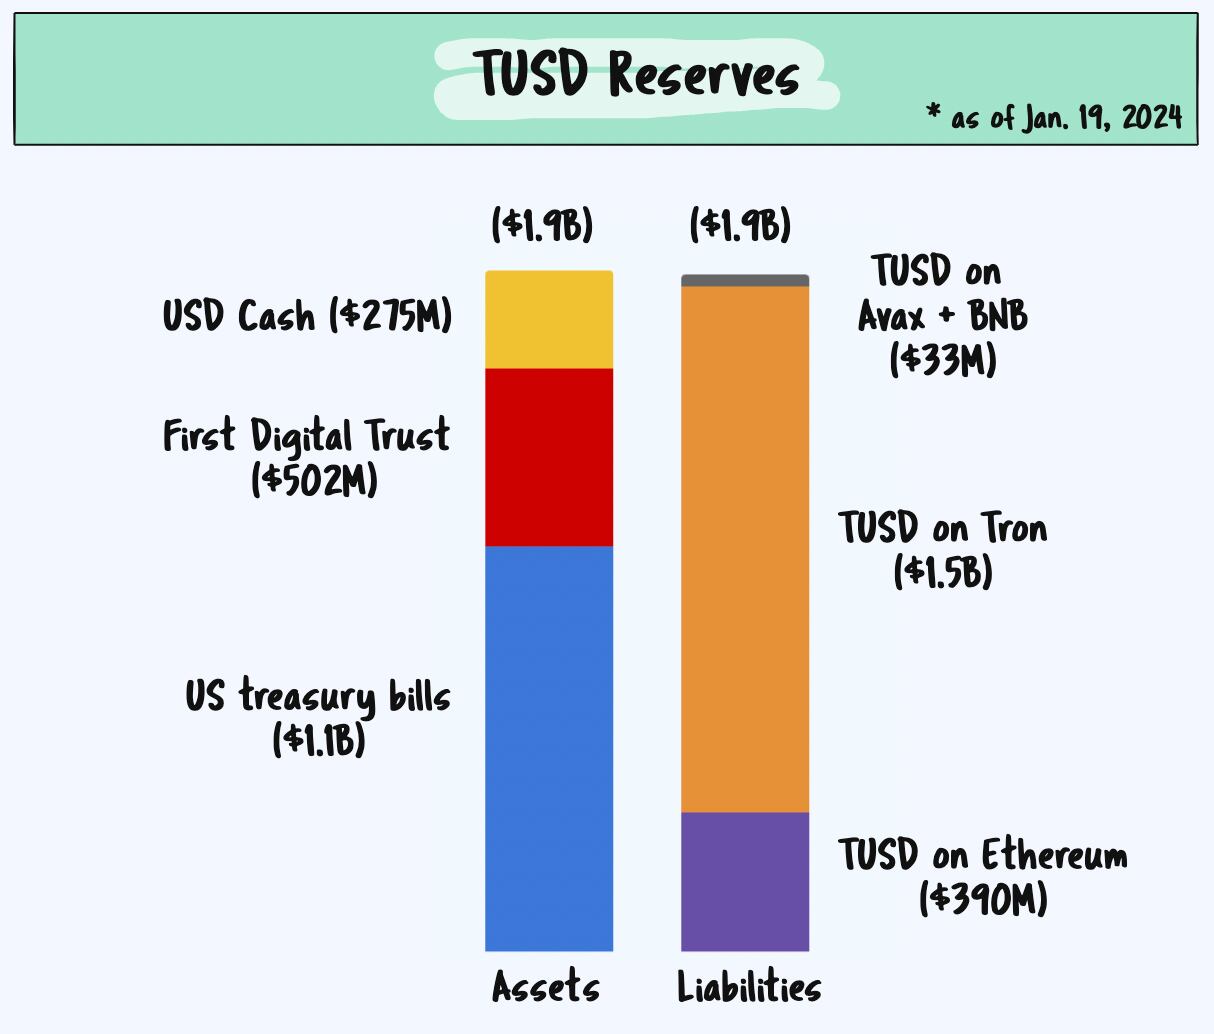 TUSD's reserves breakdown